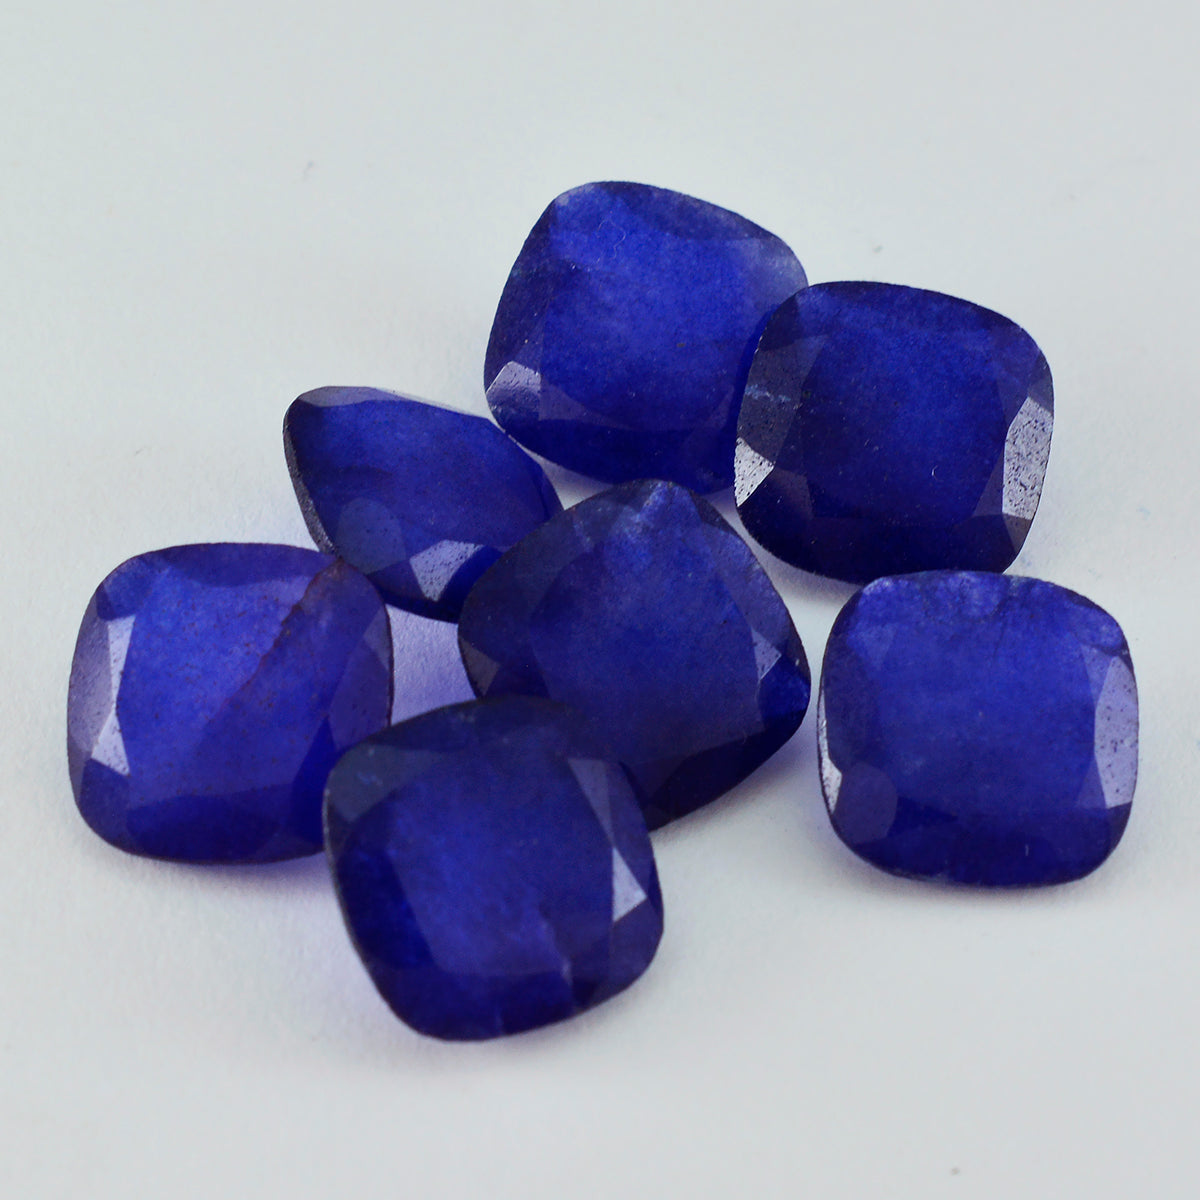 riyogems 1pc リアル ブルー ジャスパー ファセット 8x8 mm クッション形状 aaa 品質ルース宝石